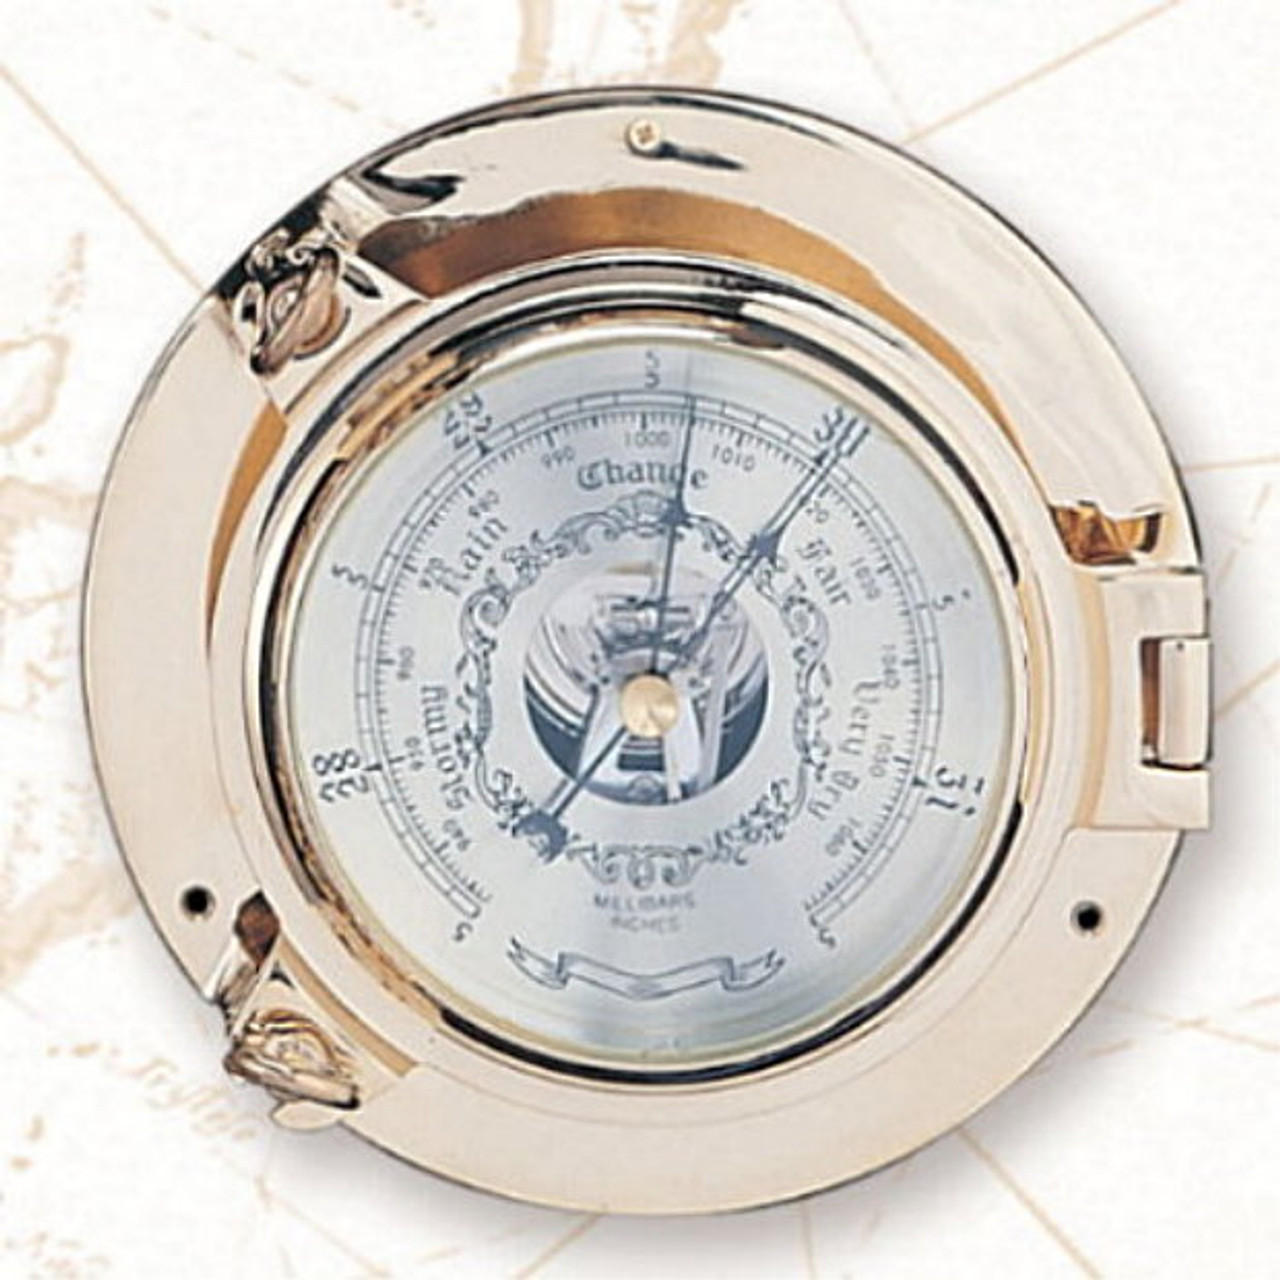 Nautical Brass Porthole German Barometers